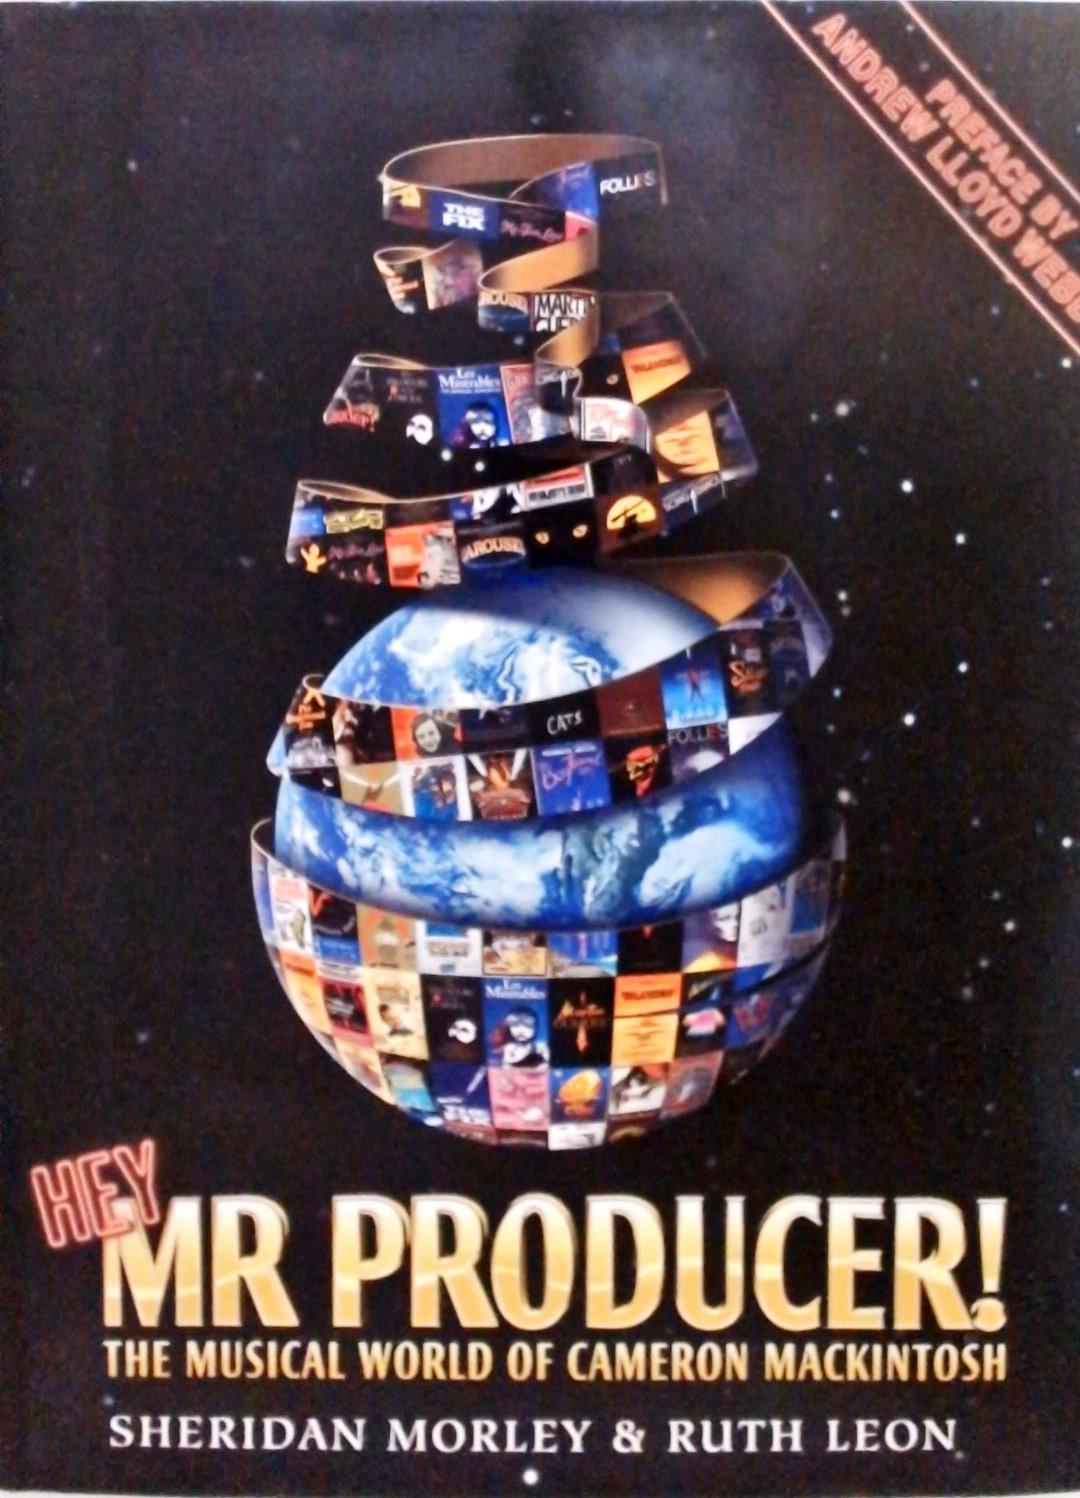 Hey Mr Producer!